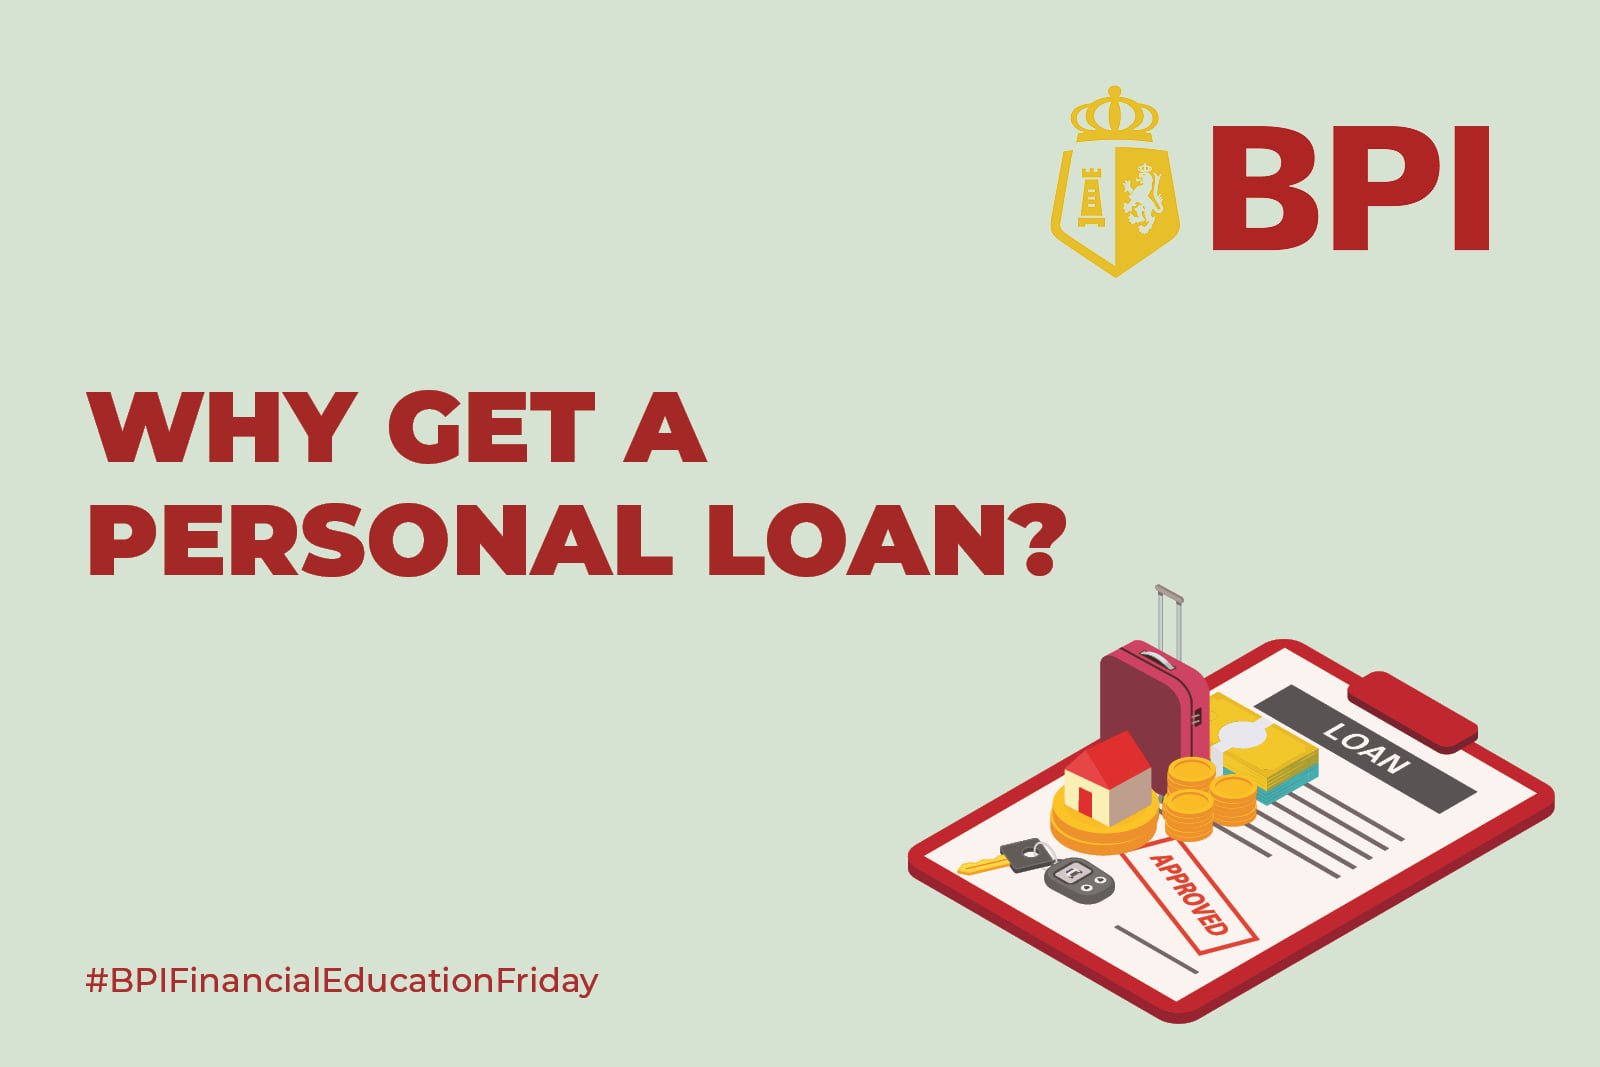 bpi personal loan application - why should i get a bpi personal loan